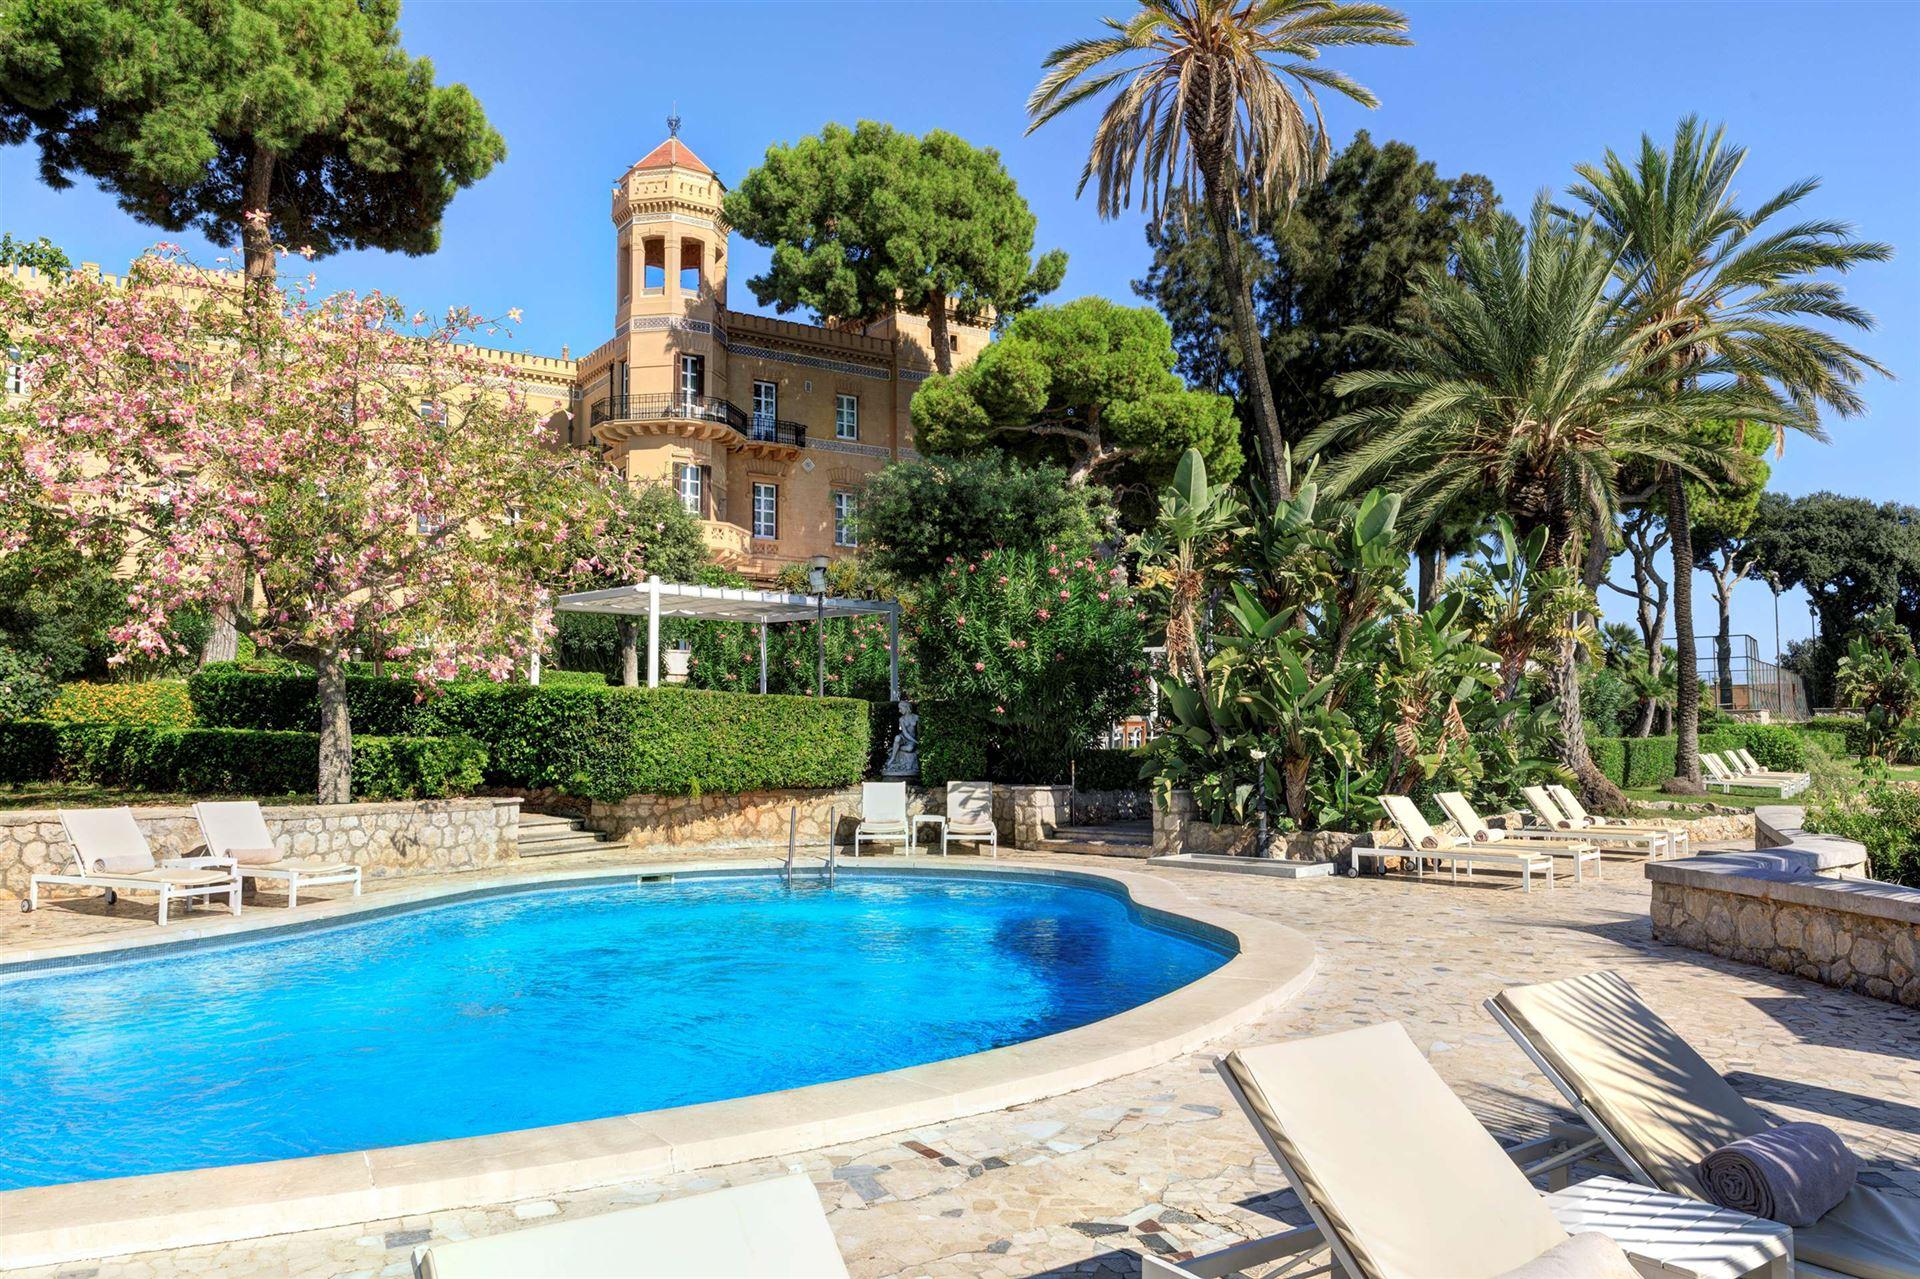 Villa Igiea, a Rocco Forte Hotel luxe hotel deals